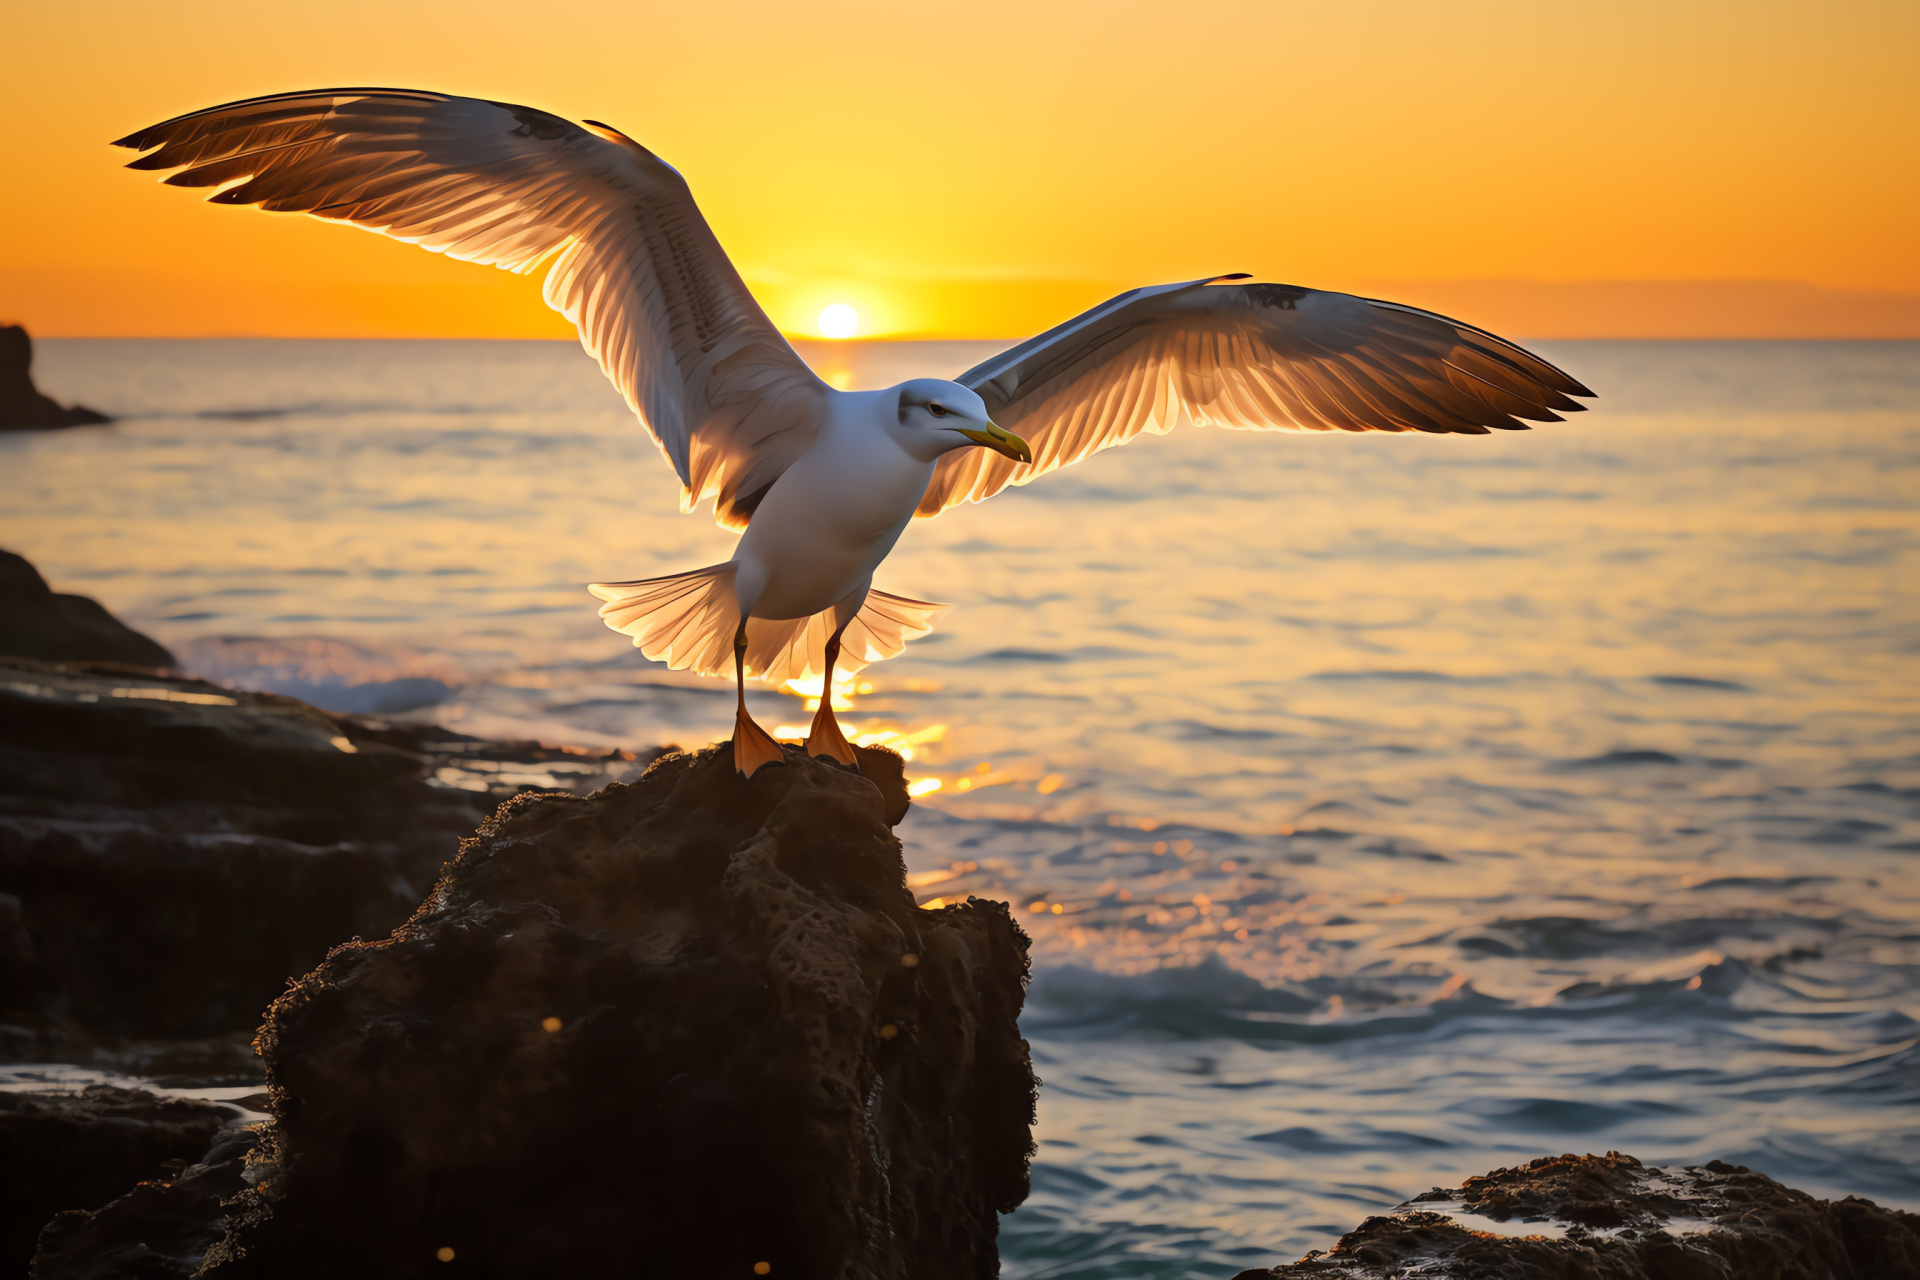 Seashore bird, glossy feathers, vibrant bill, coastal perch, tranquil bay, HD Desktop Wallpaper